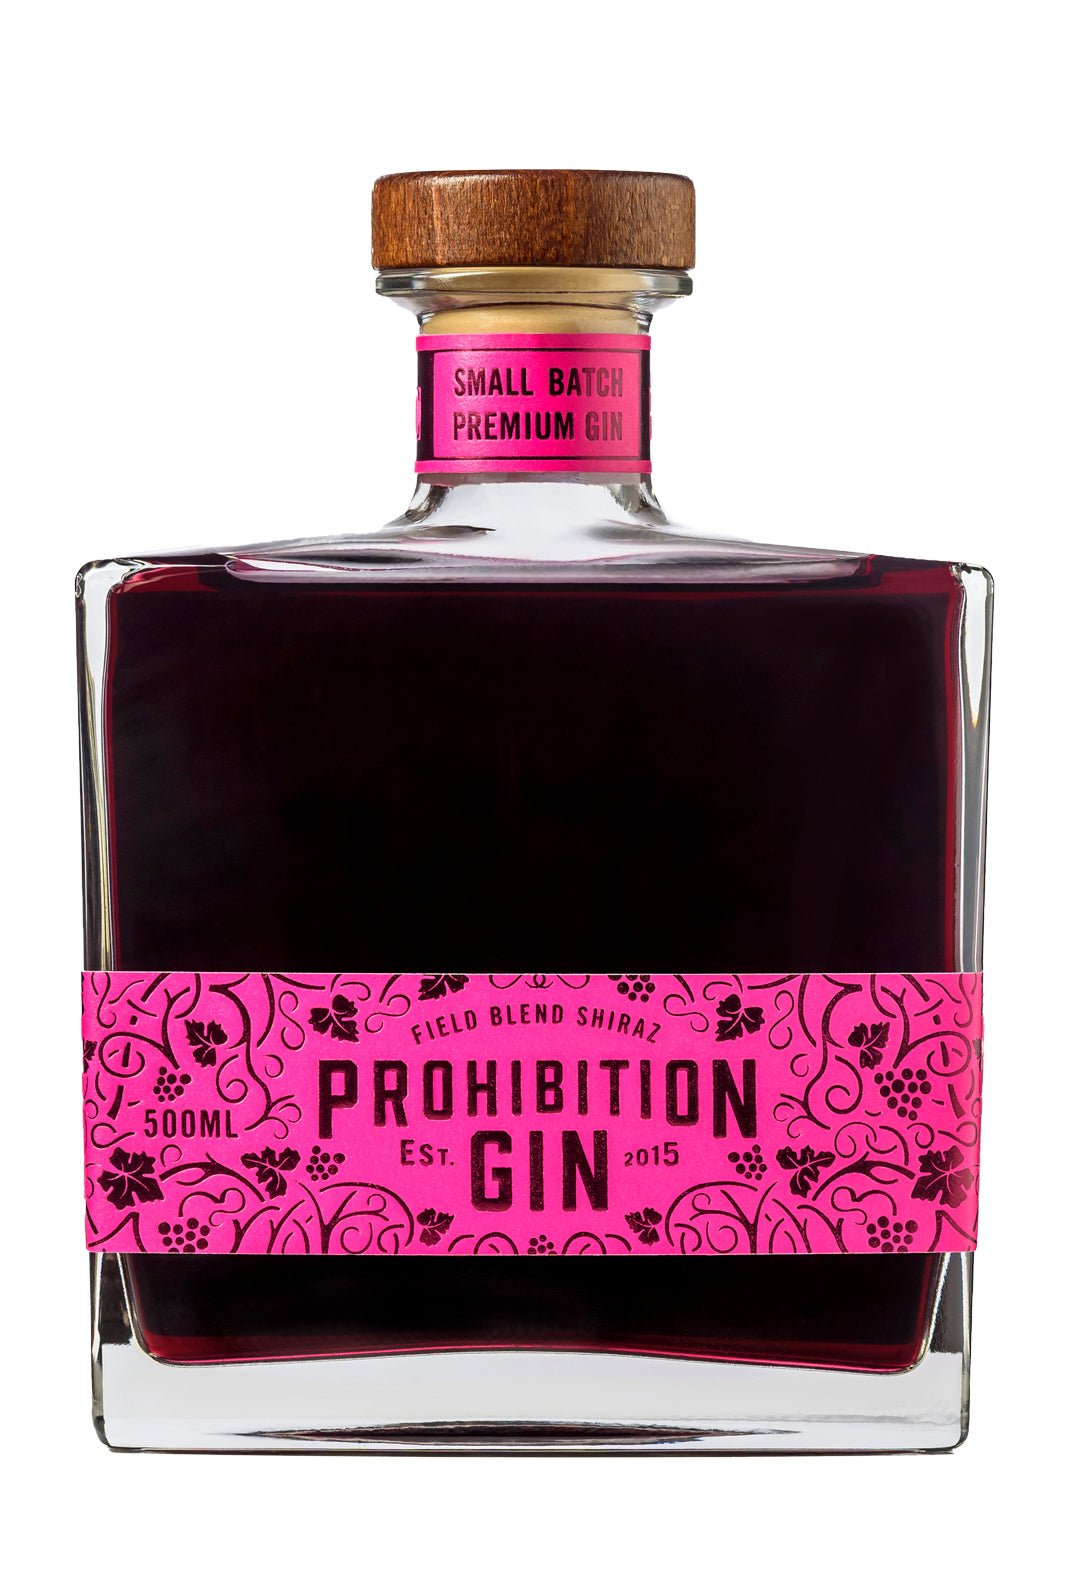 Prohibition Field Blend Shiraz Gin 38% 500ml | Gin | Shop online at Spirits of France